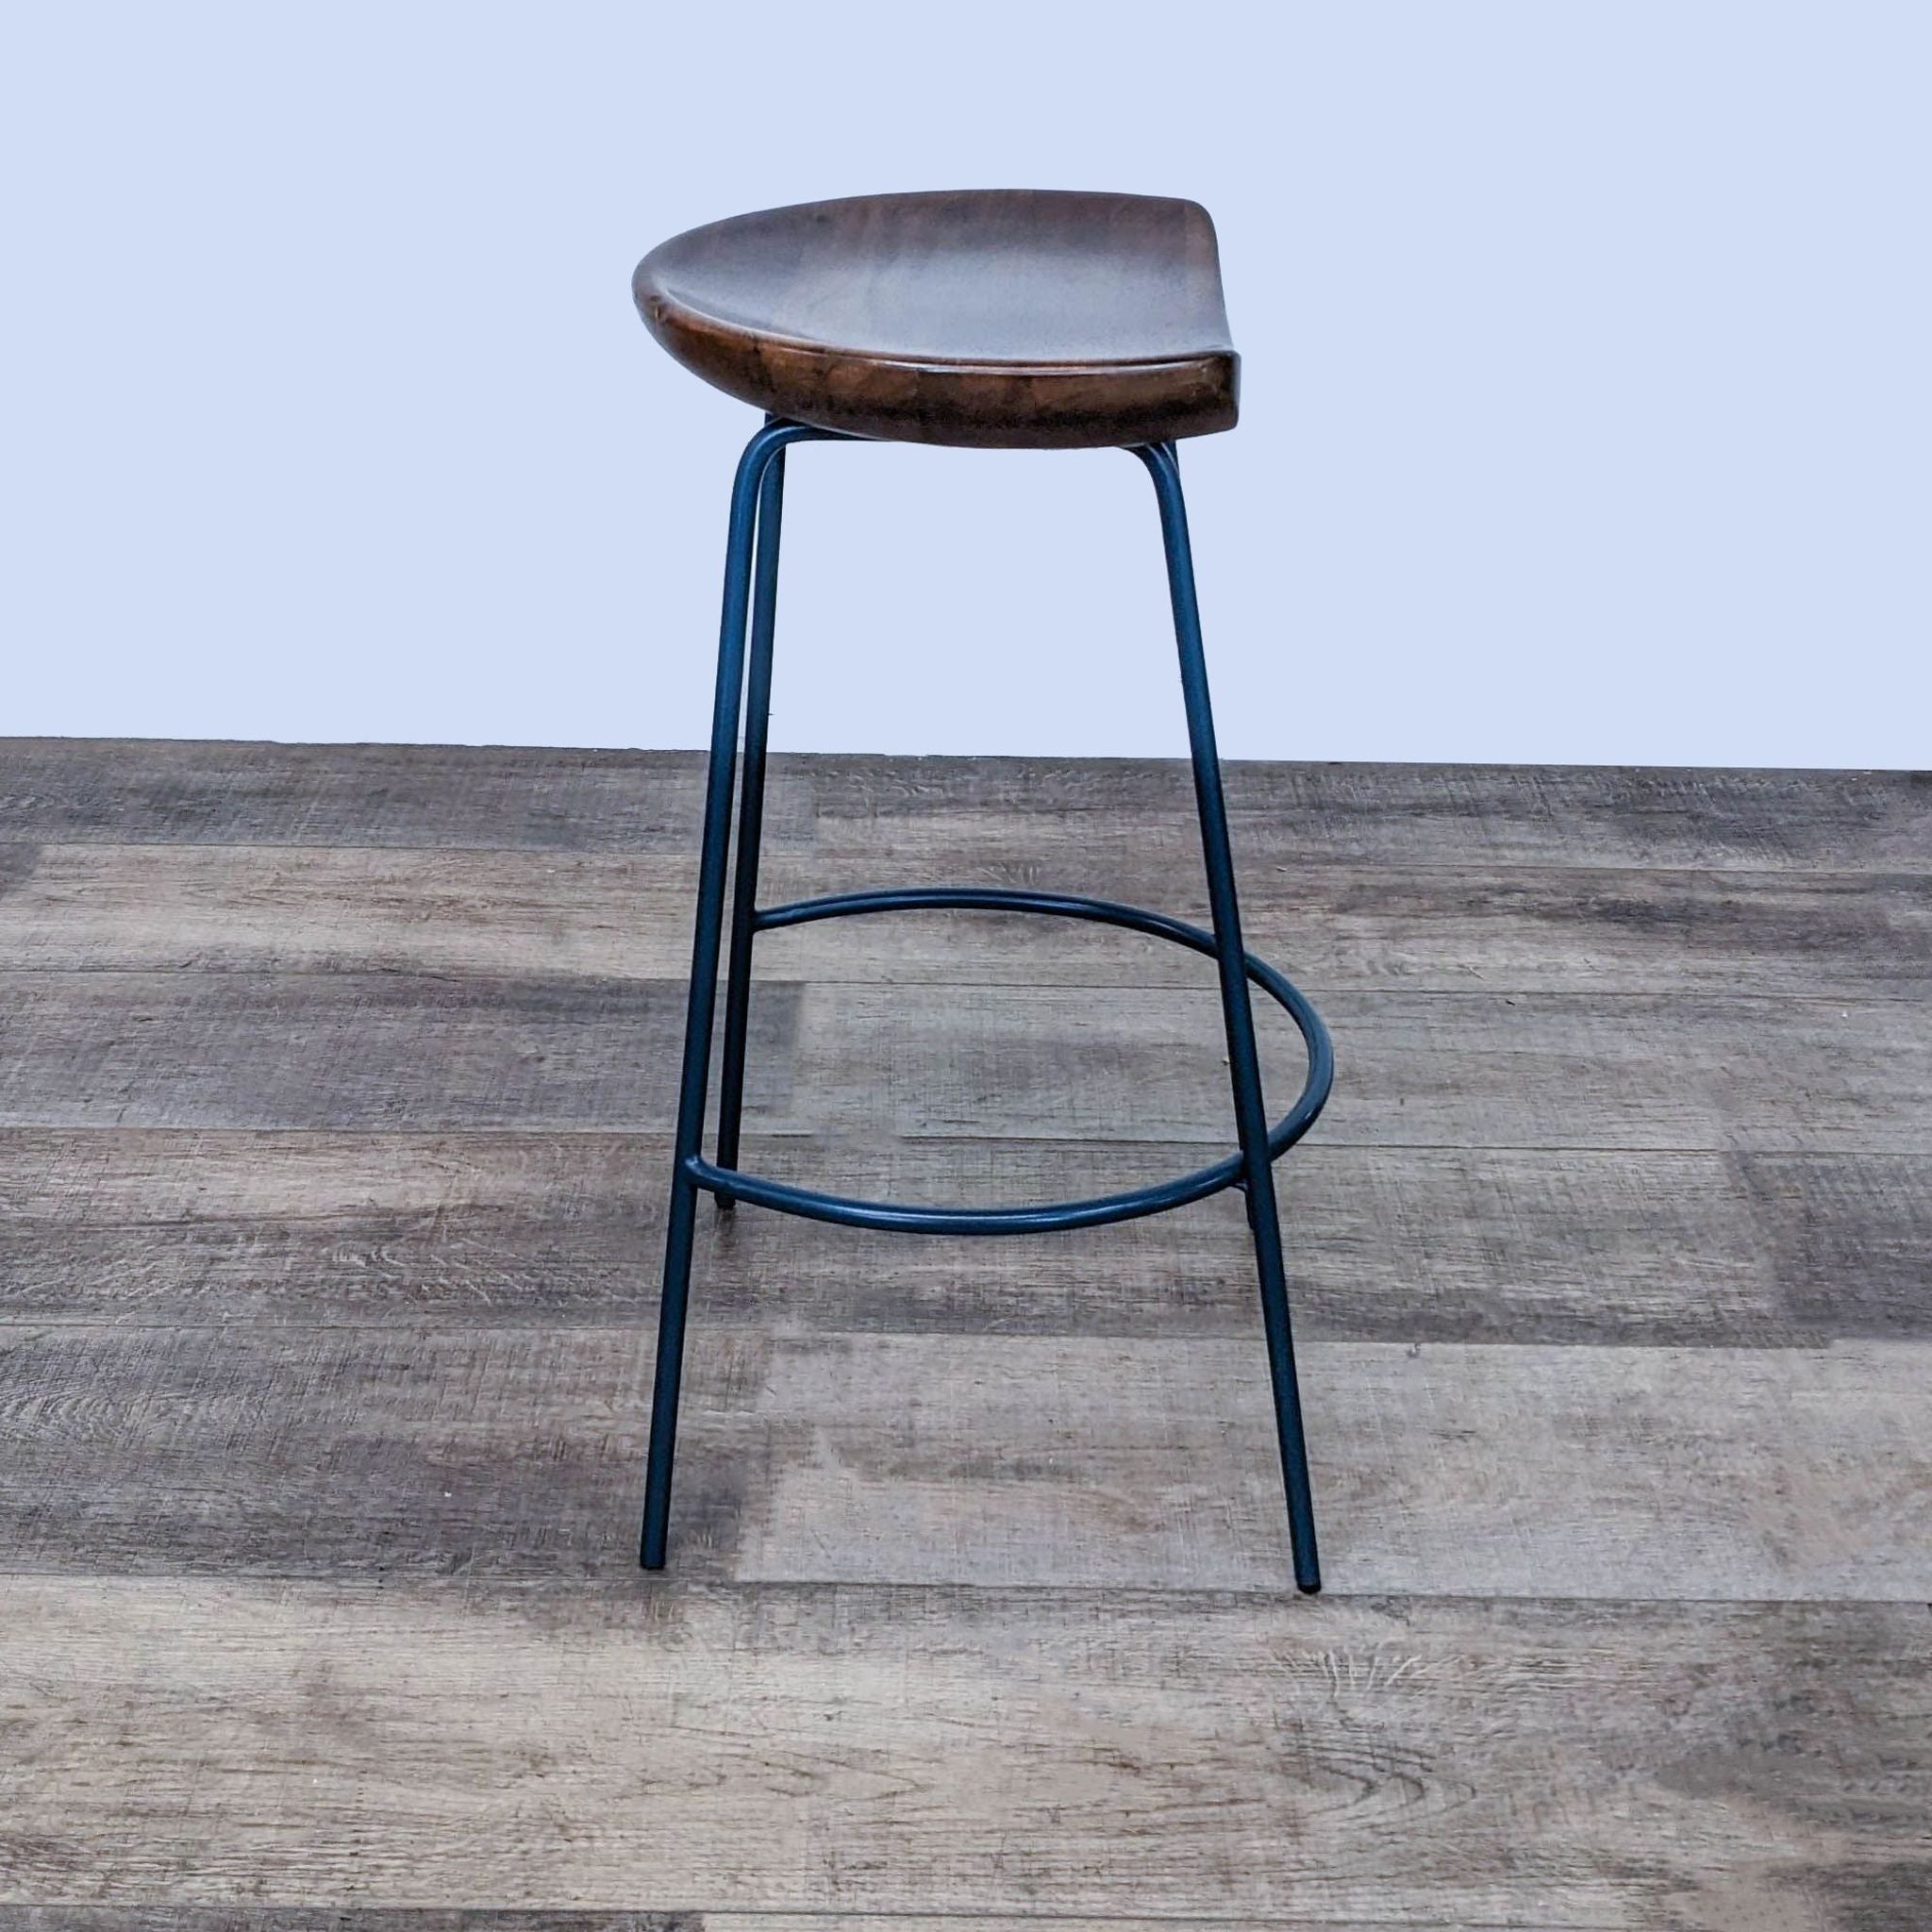 West Elm Alden Solid Wood Bucket Seat Counter Stool on a Black Steel Base, against a wooden floor backdrop.